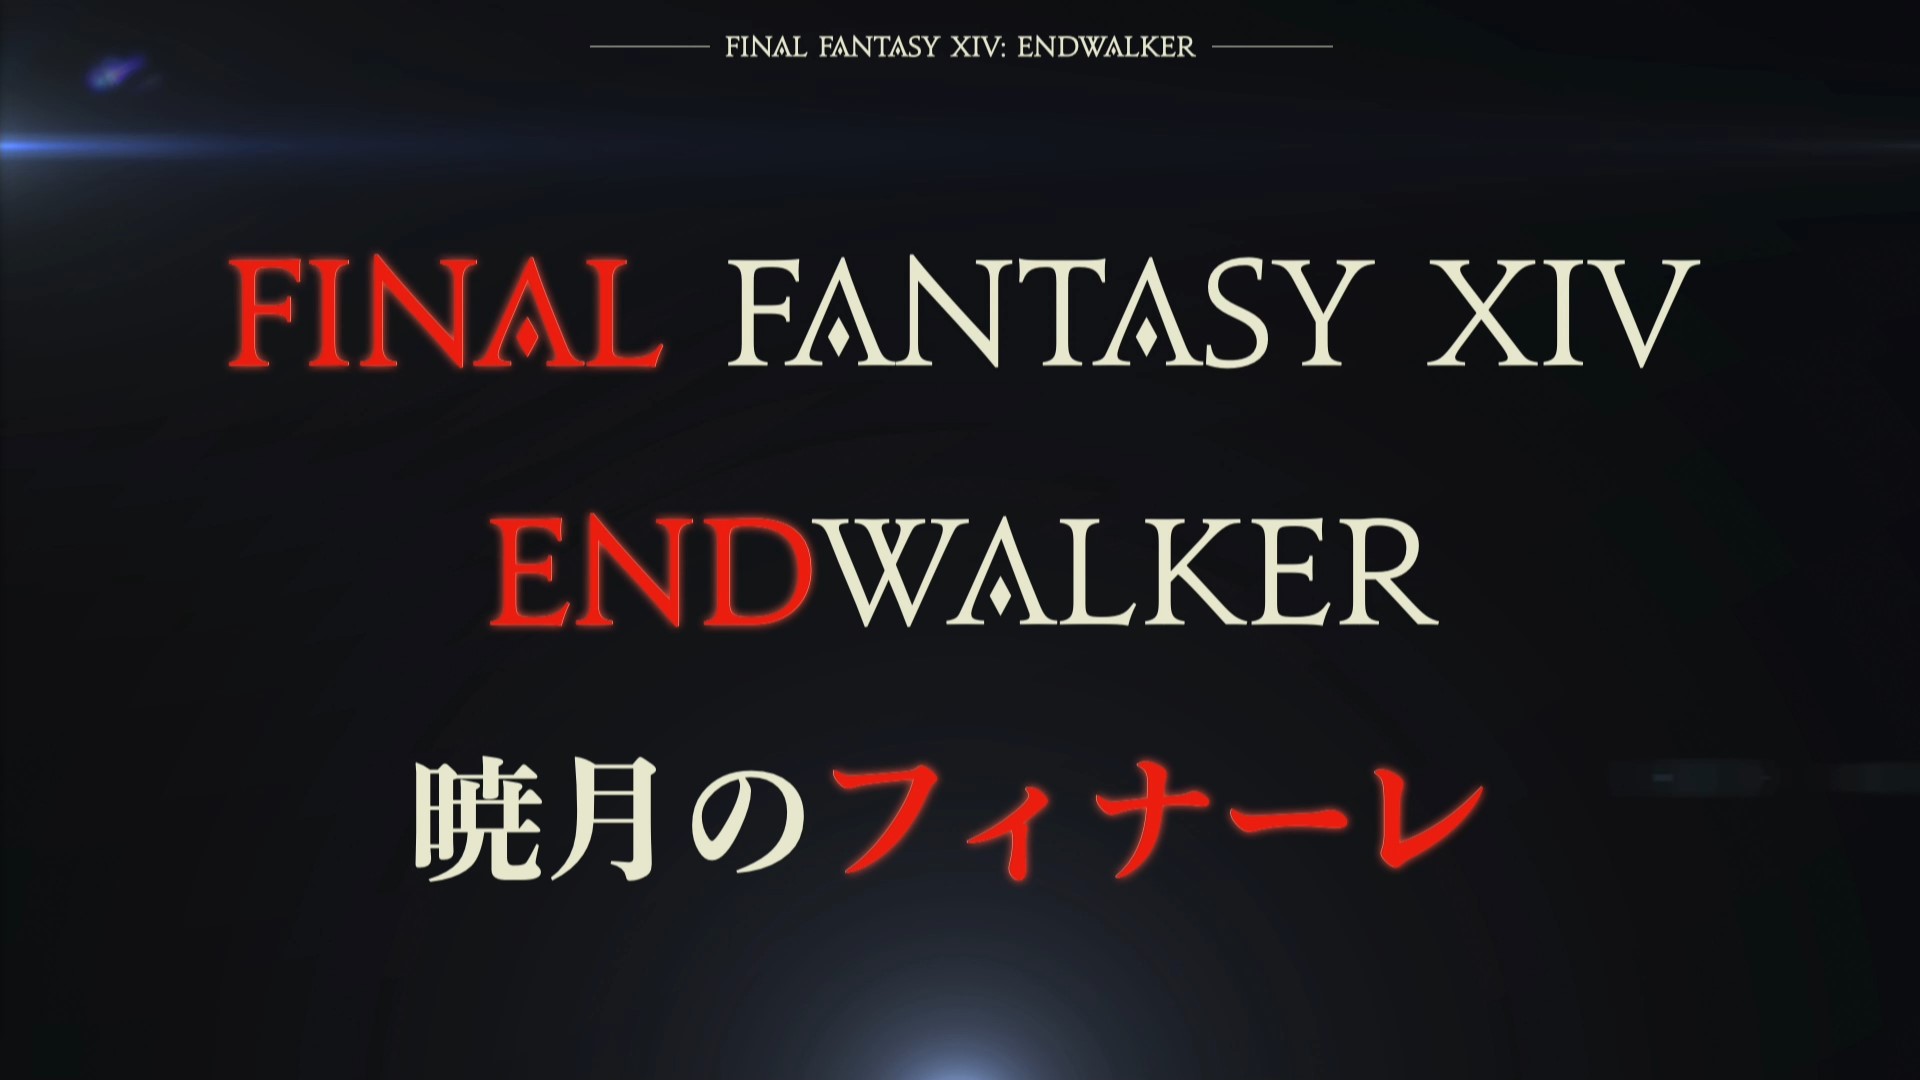 FFXIV 6.0 Endwalker: Final. End. Finale. A clear message.